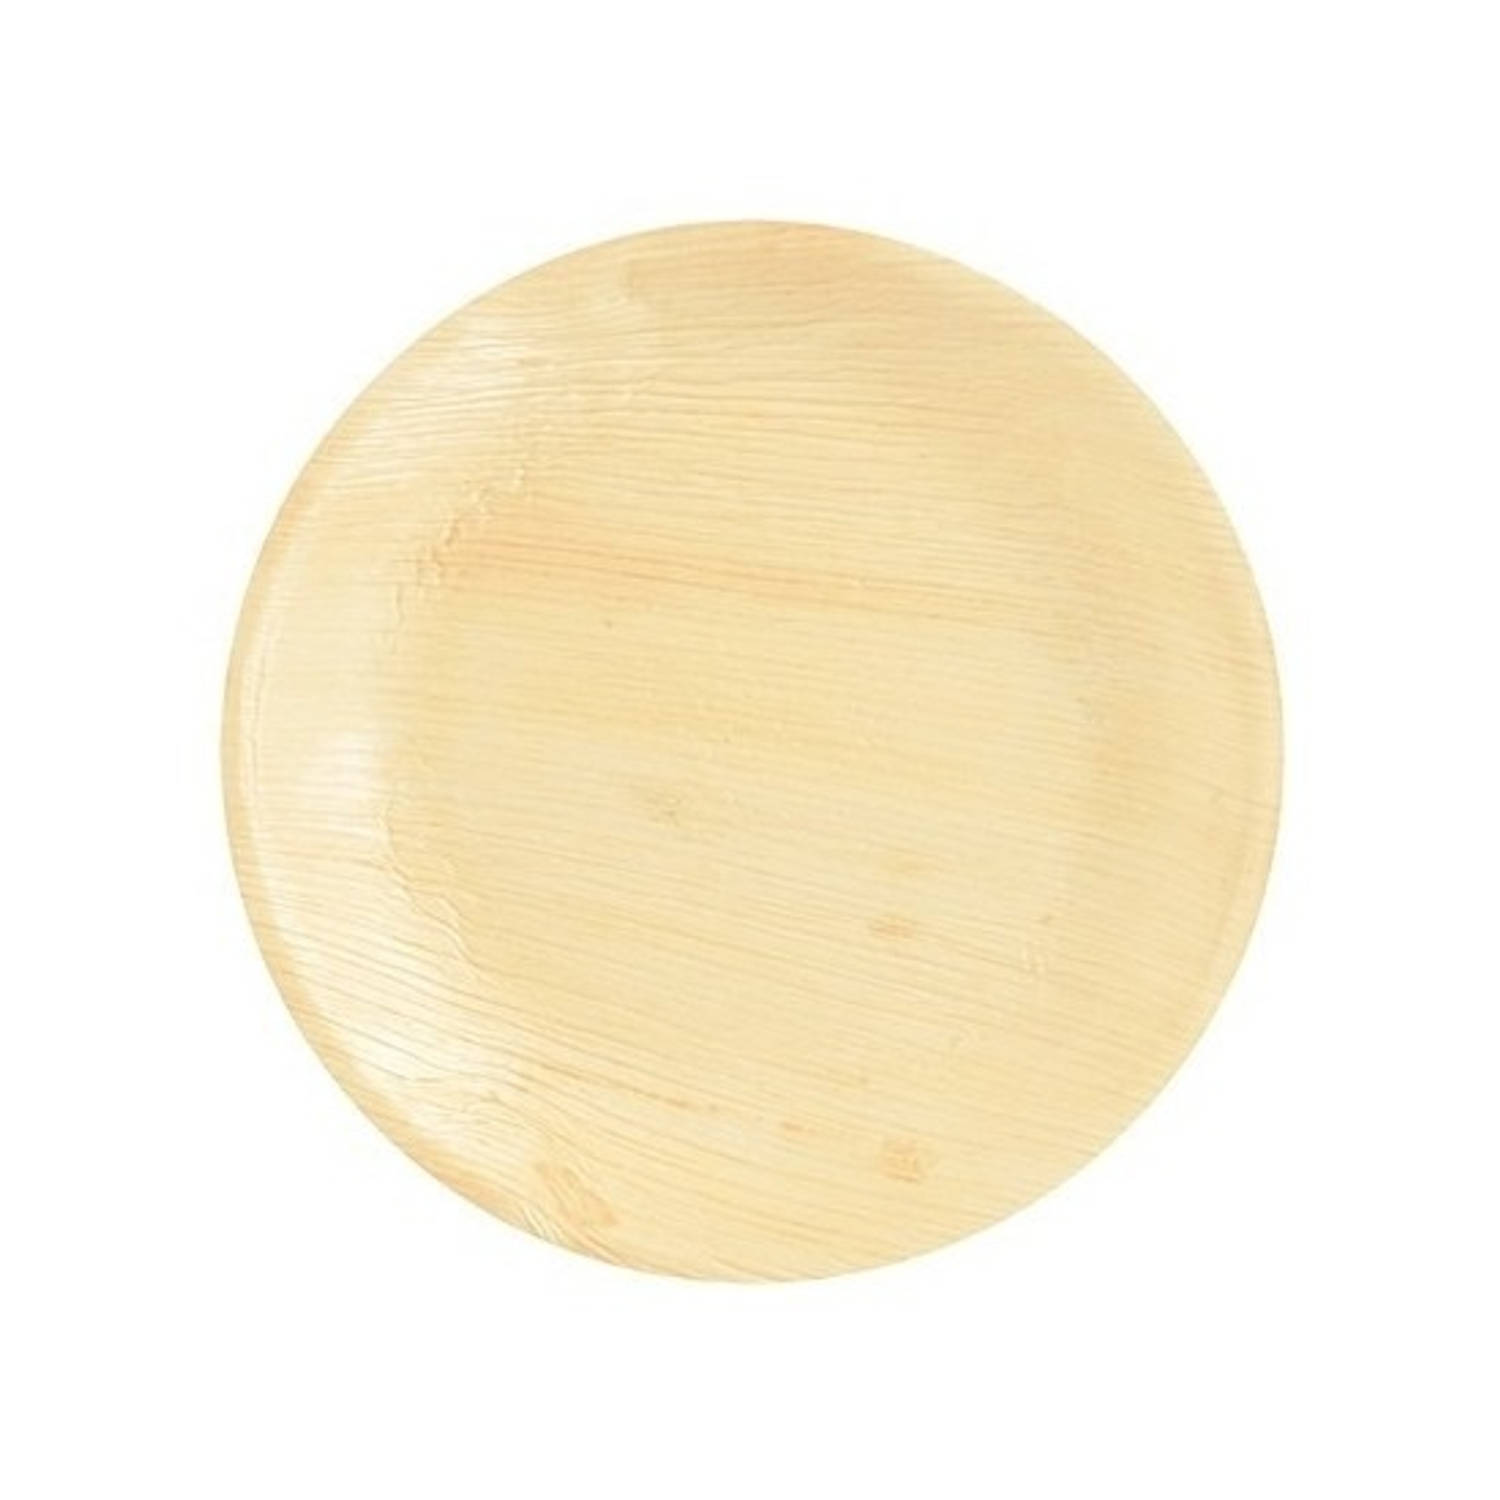 6x Palmblad borden 23 cm - Bordjes